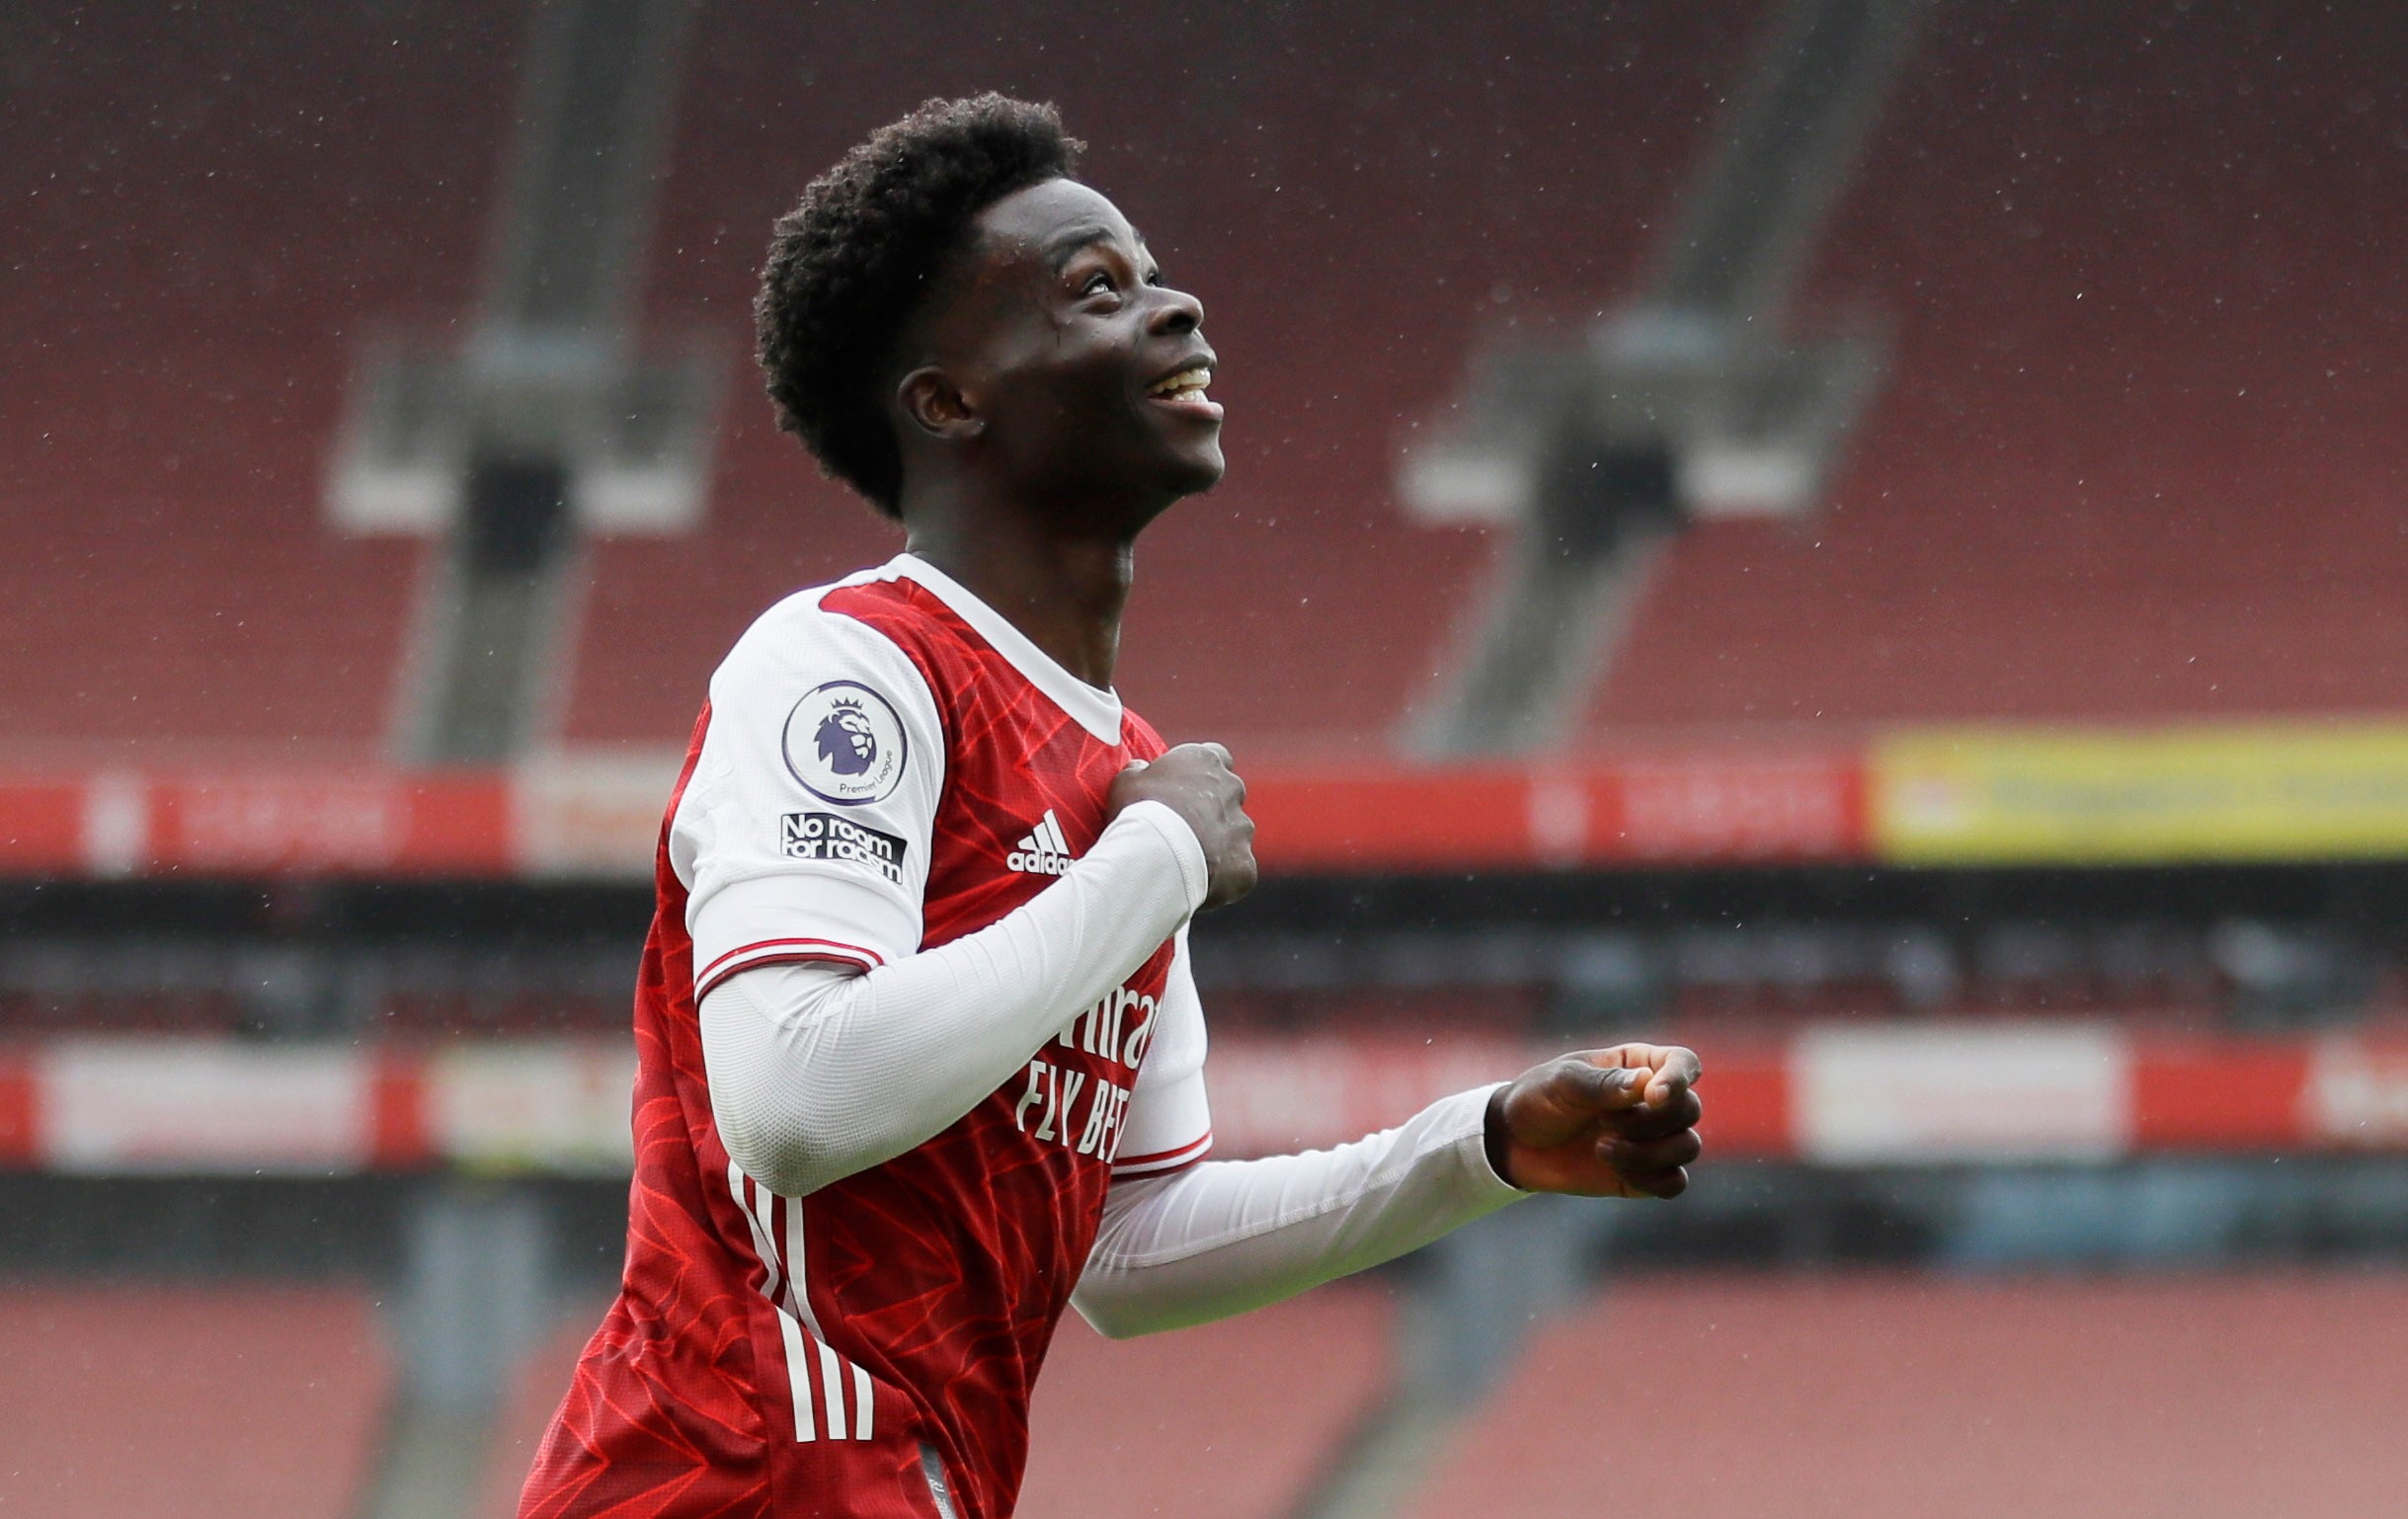 Bukayo Saka scored Arsenal's opening goal in the same week he received his first England call-up